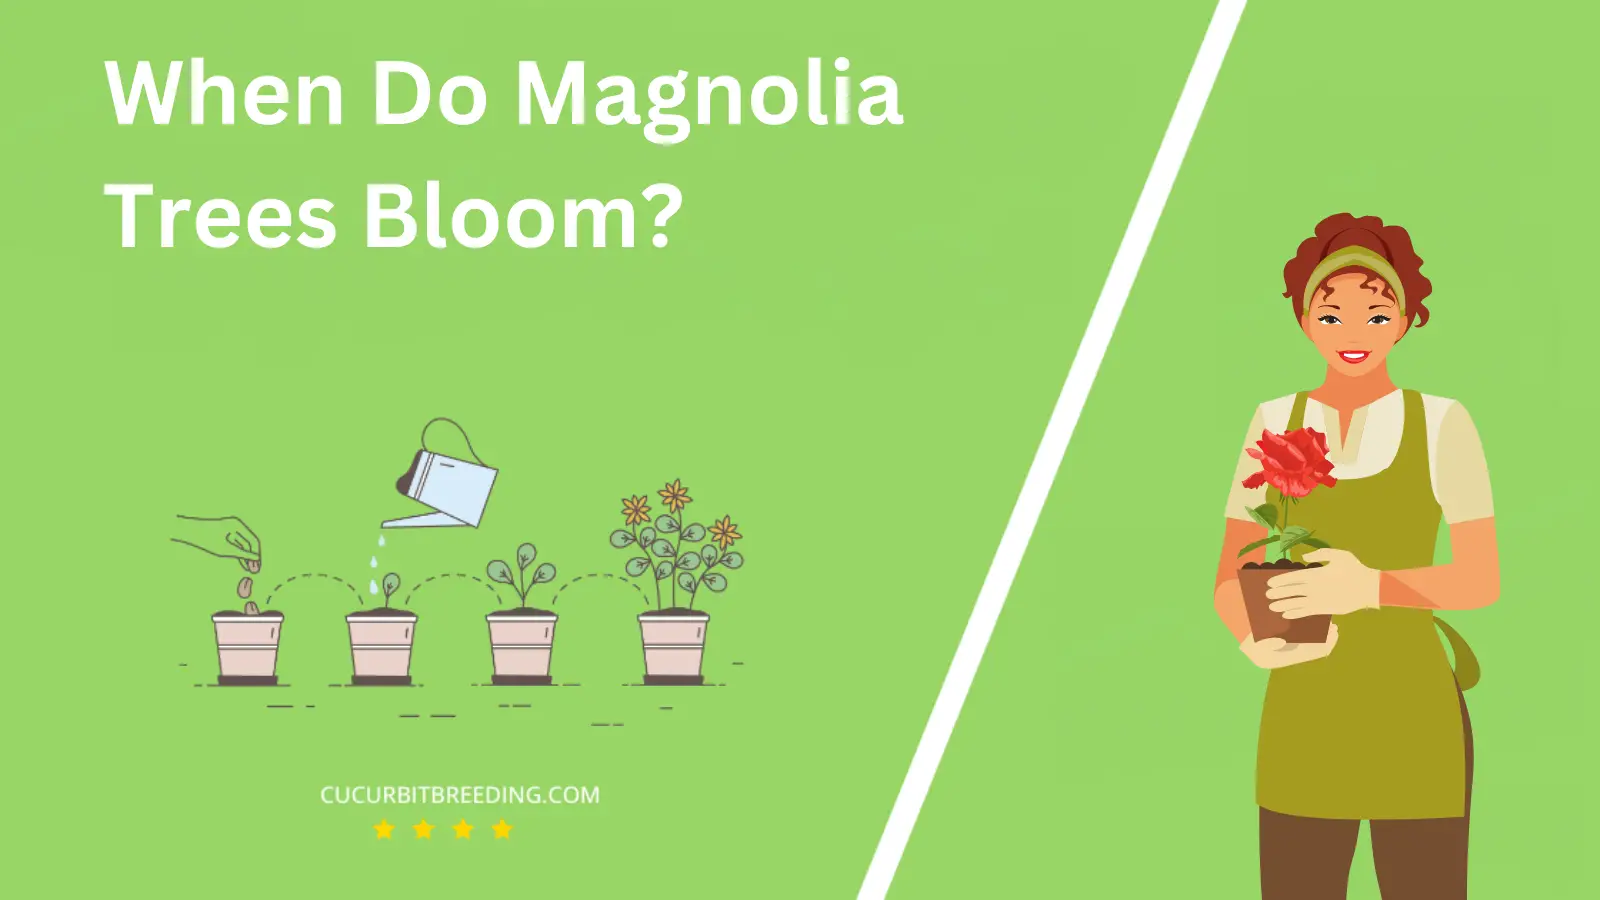 When Do Magnolia Trees Bloom?